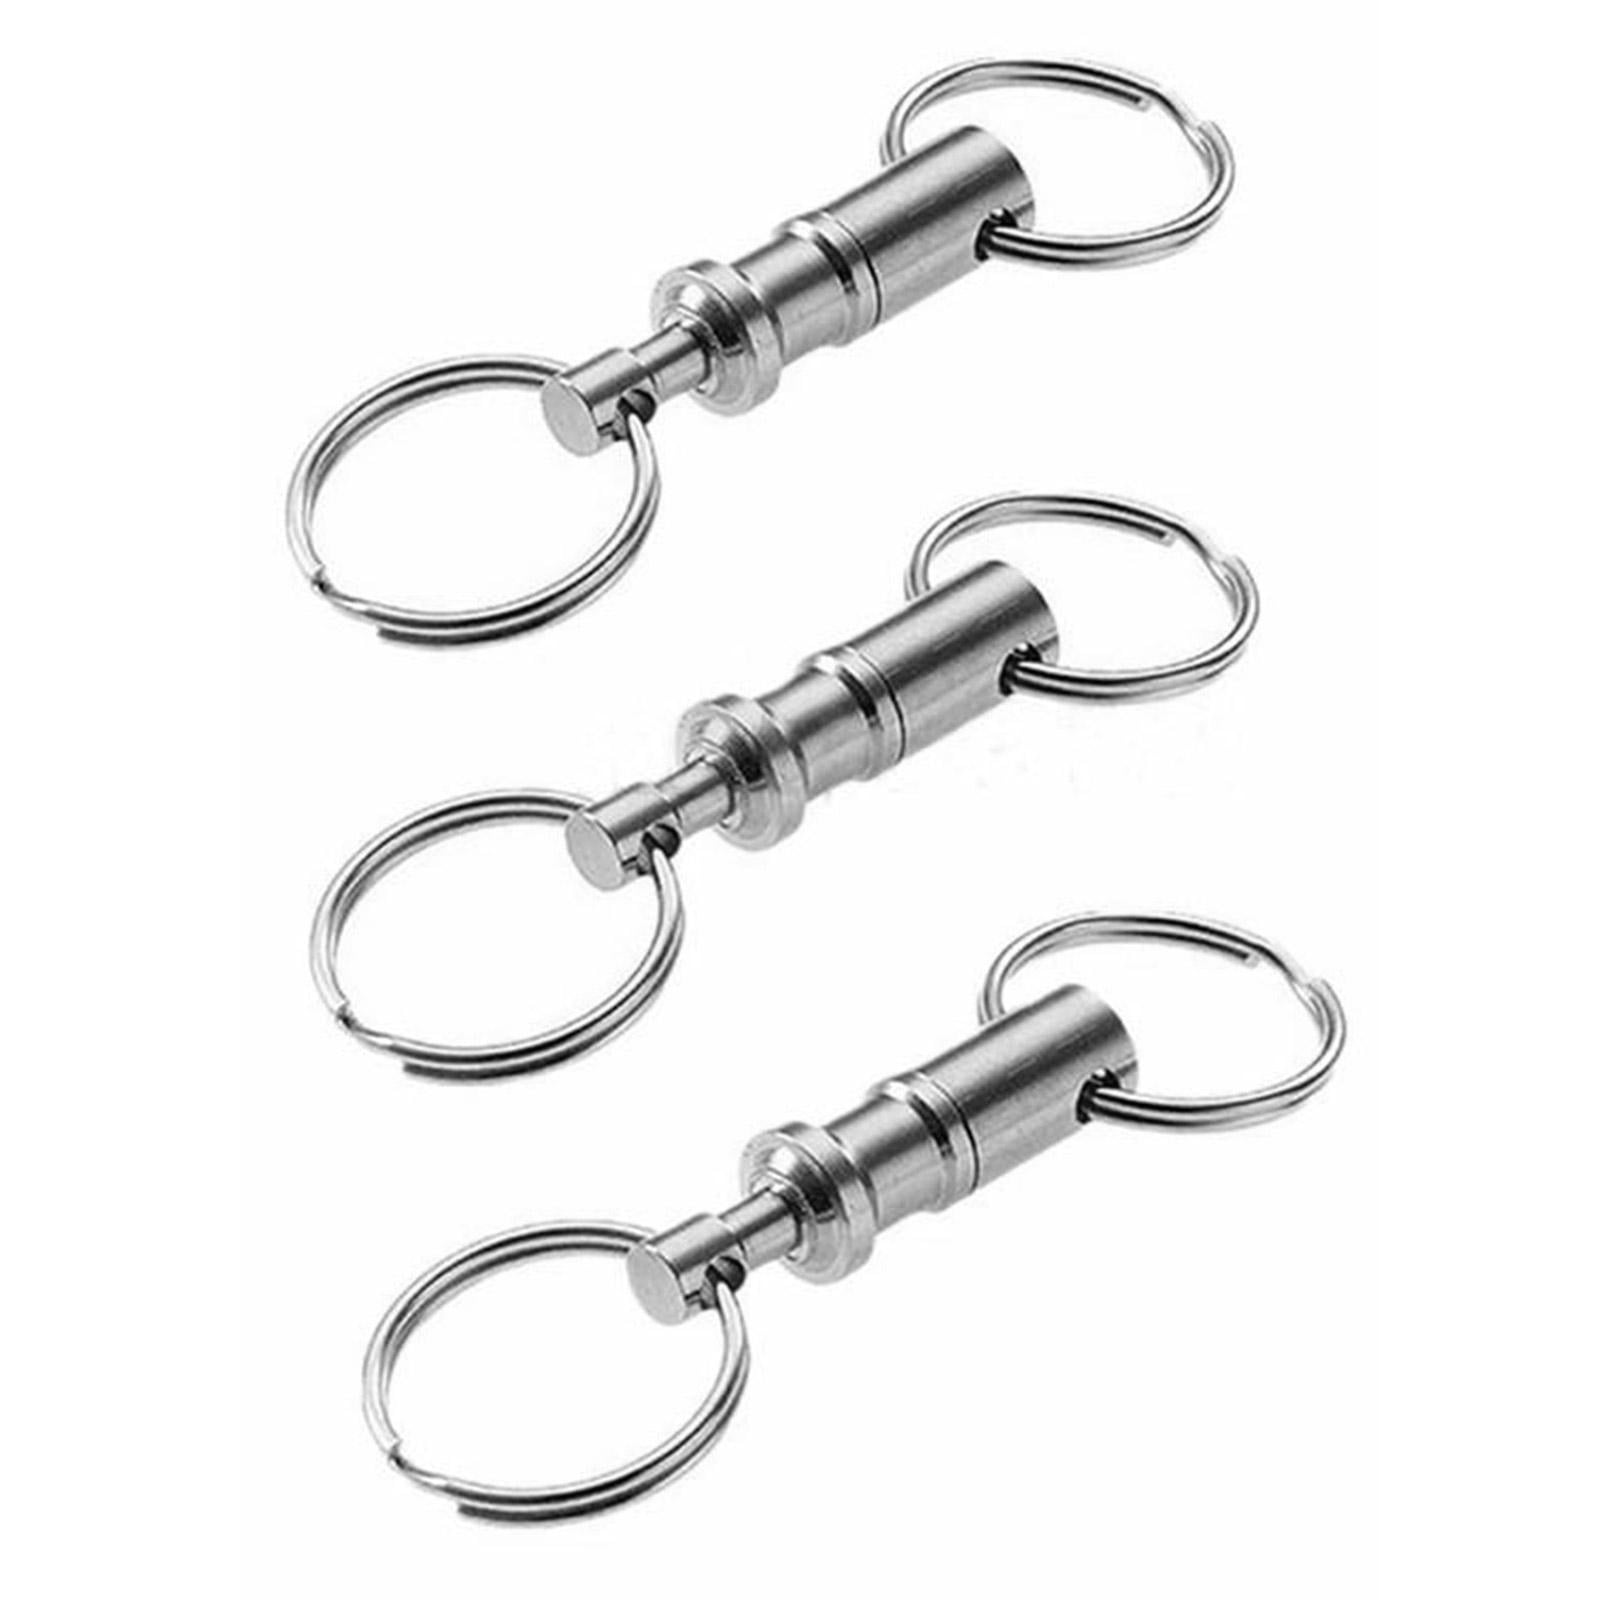 Ball Chain Key Ring Nickel Plated Stock Photo 1108216256